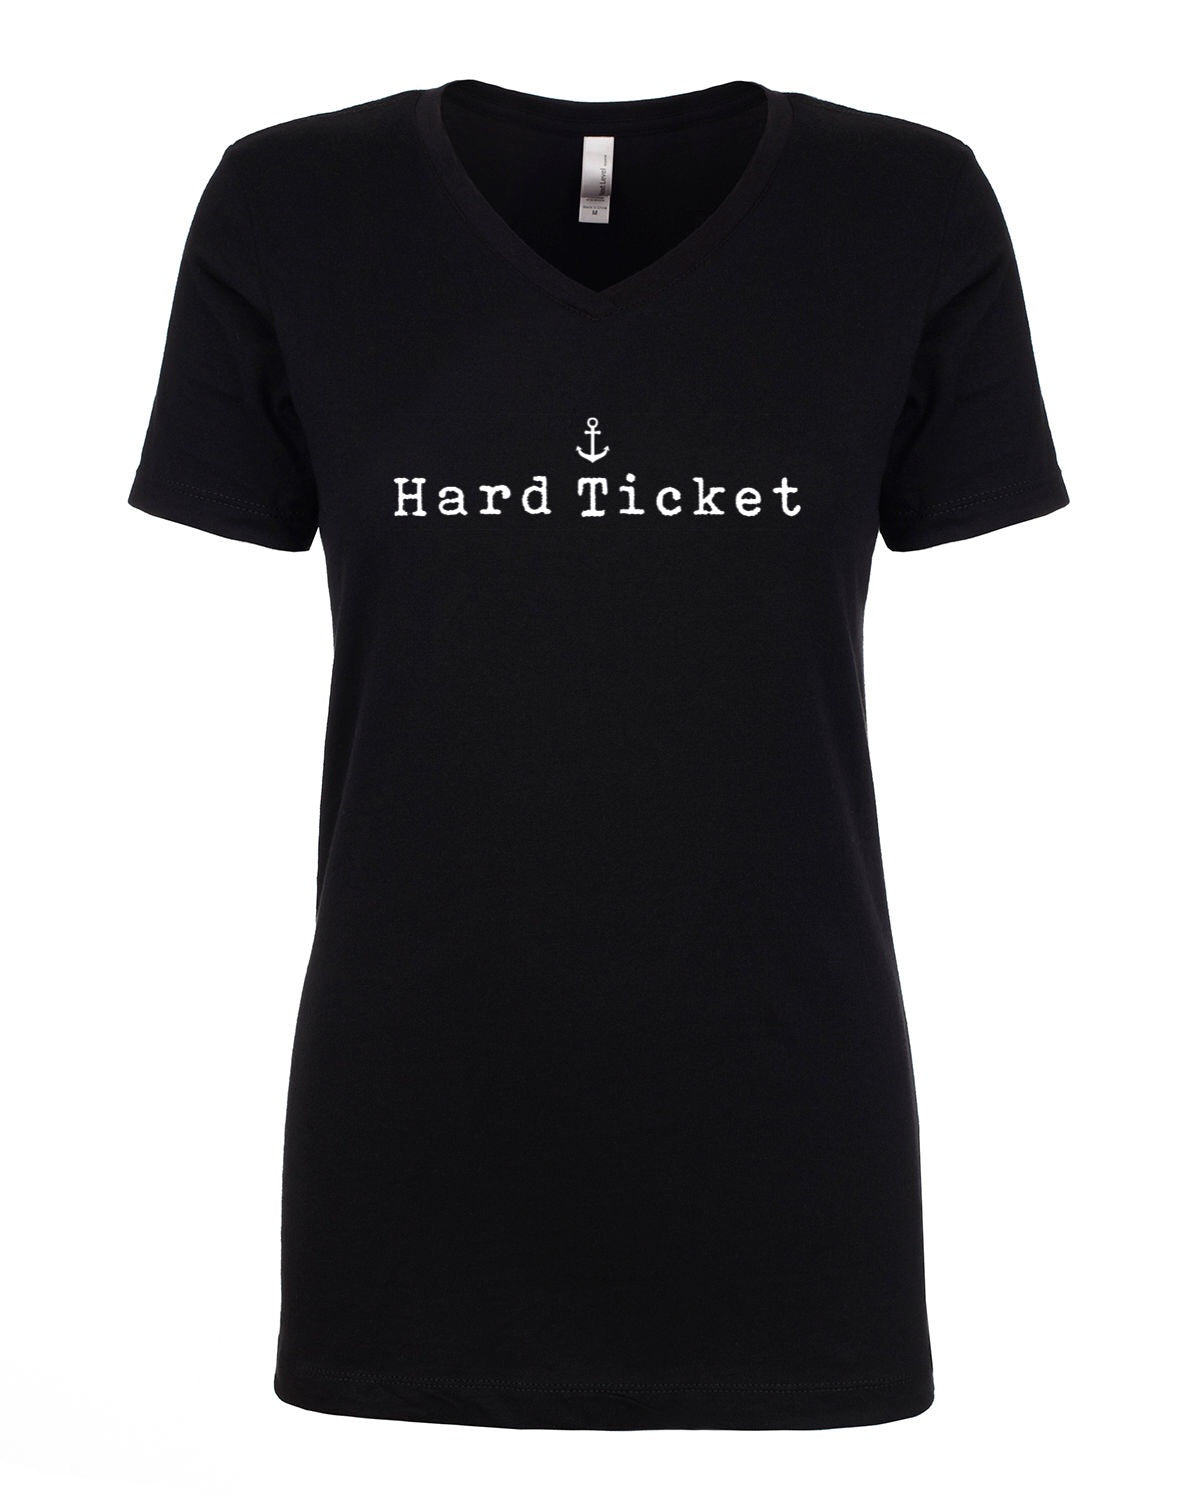 "Hard Ticket" T-Shirt